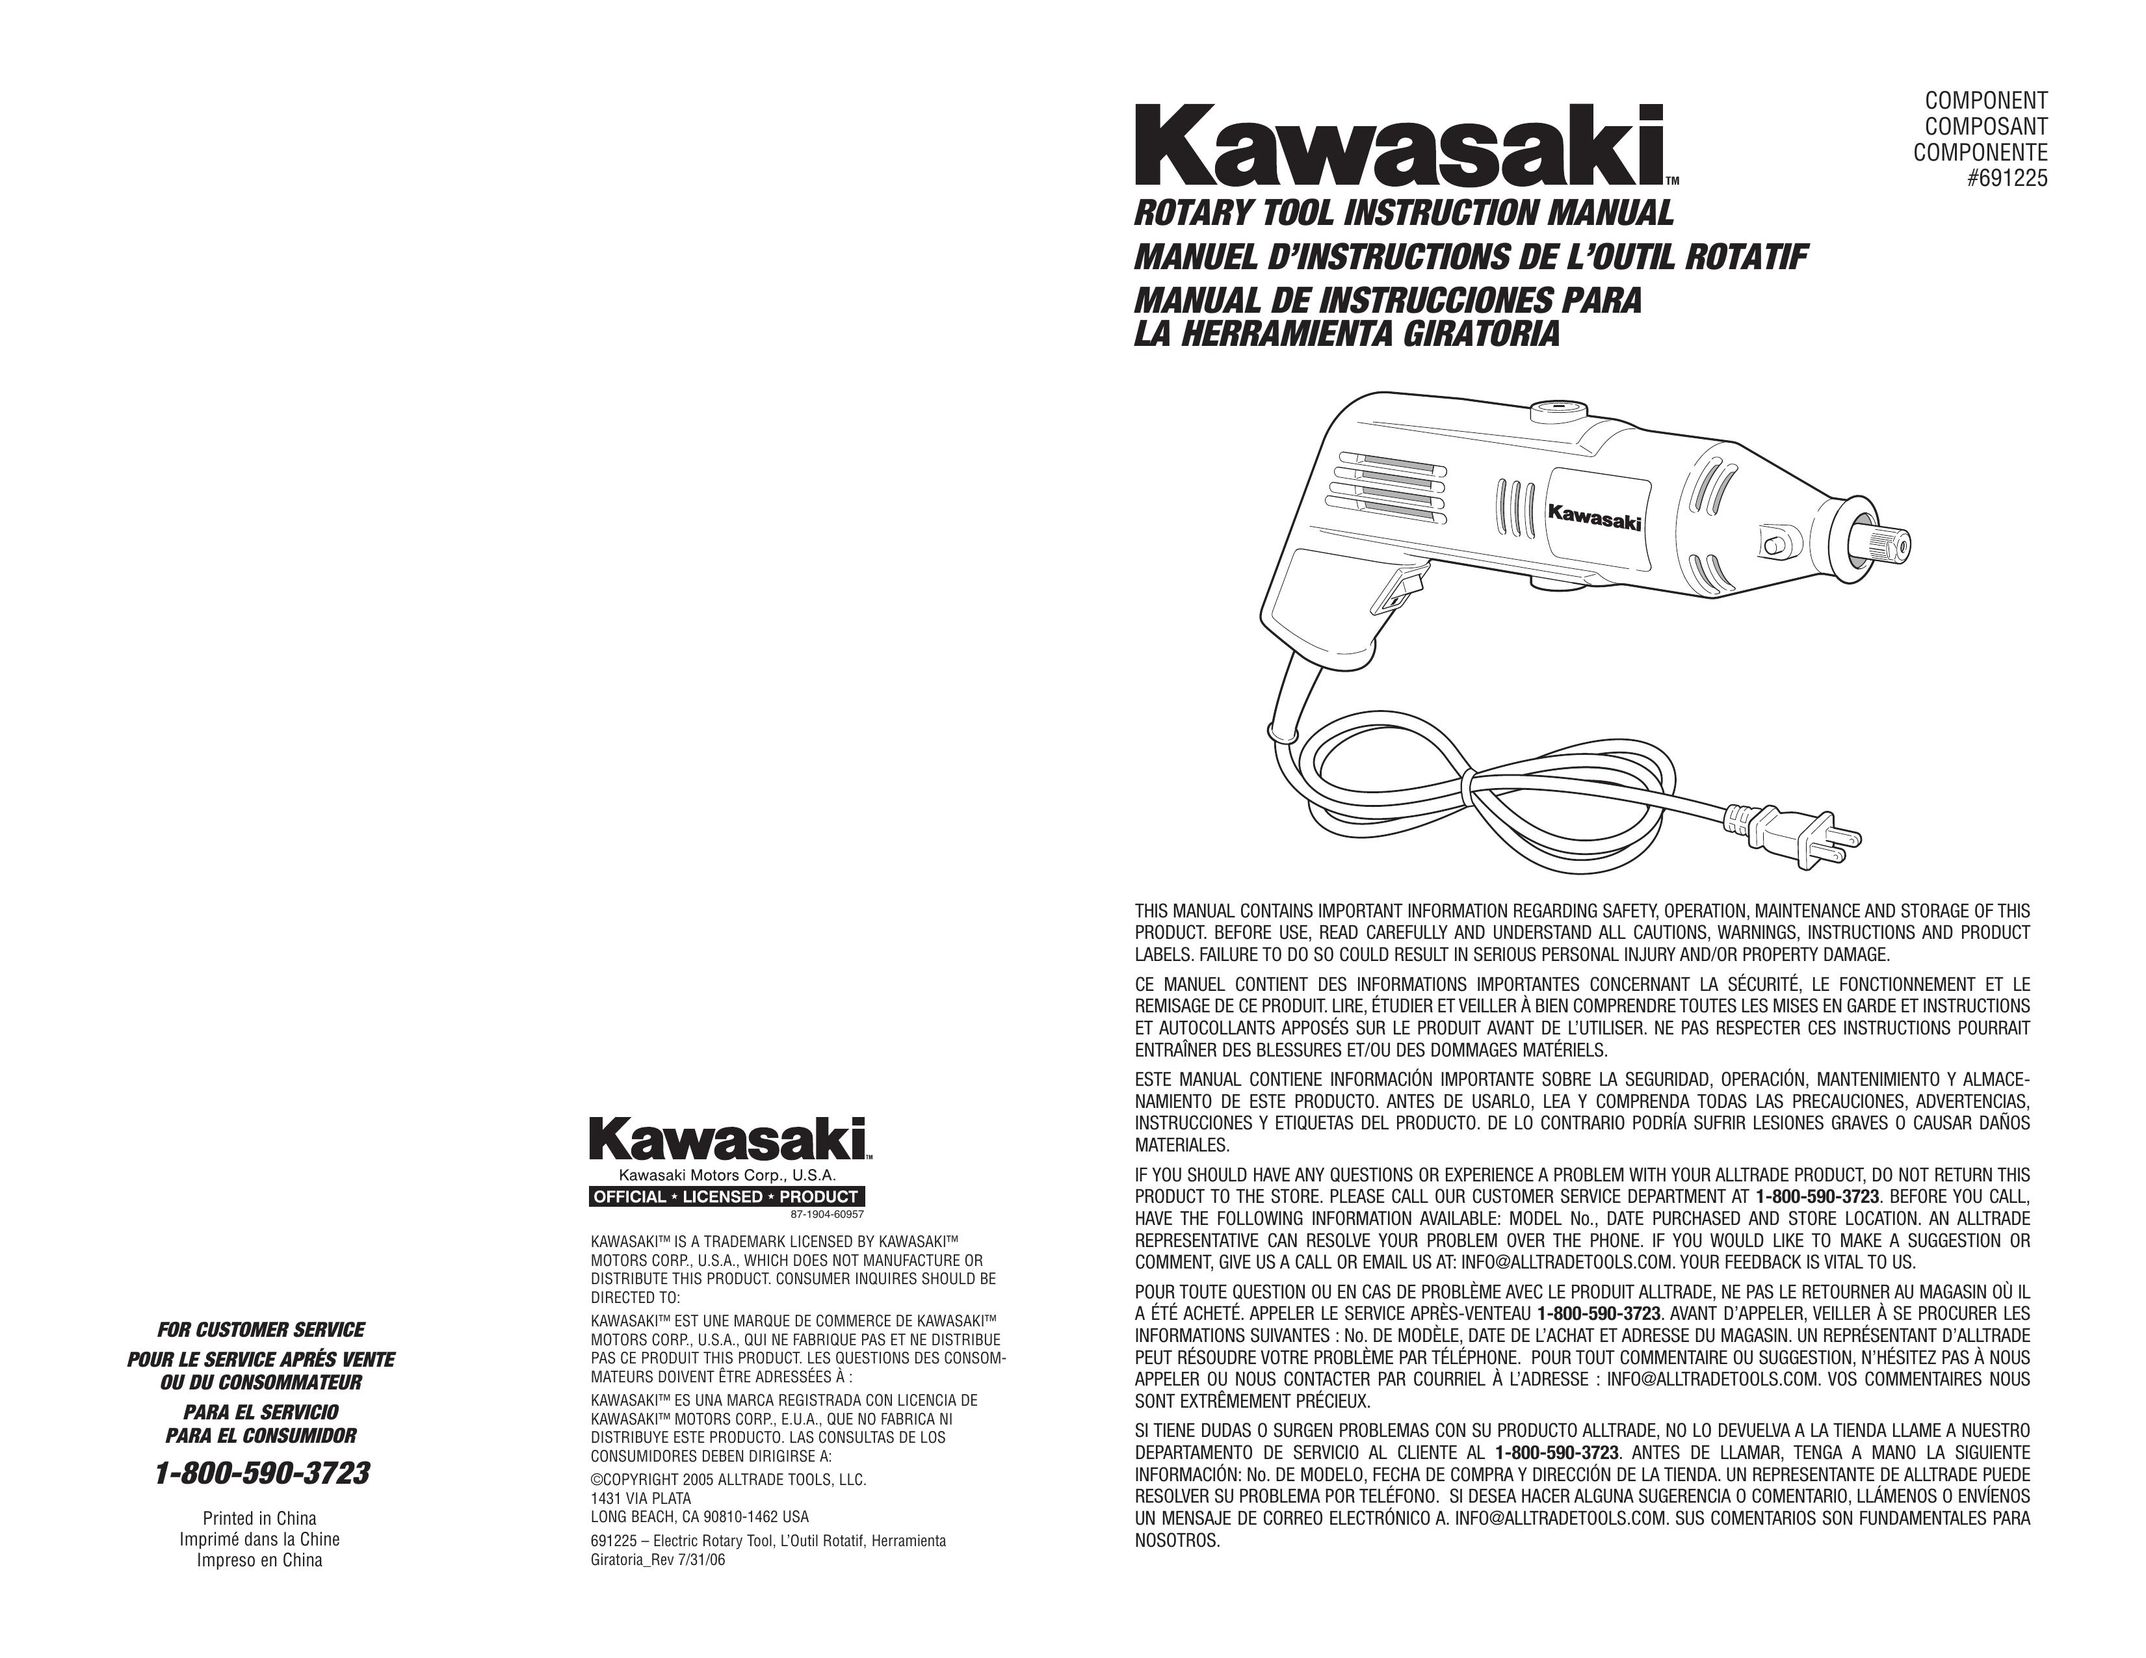 Kawasaki 840169 Power Hammer User Manual